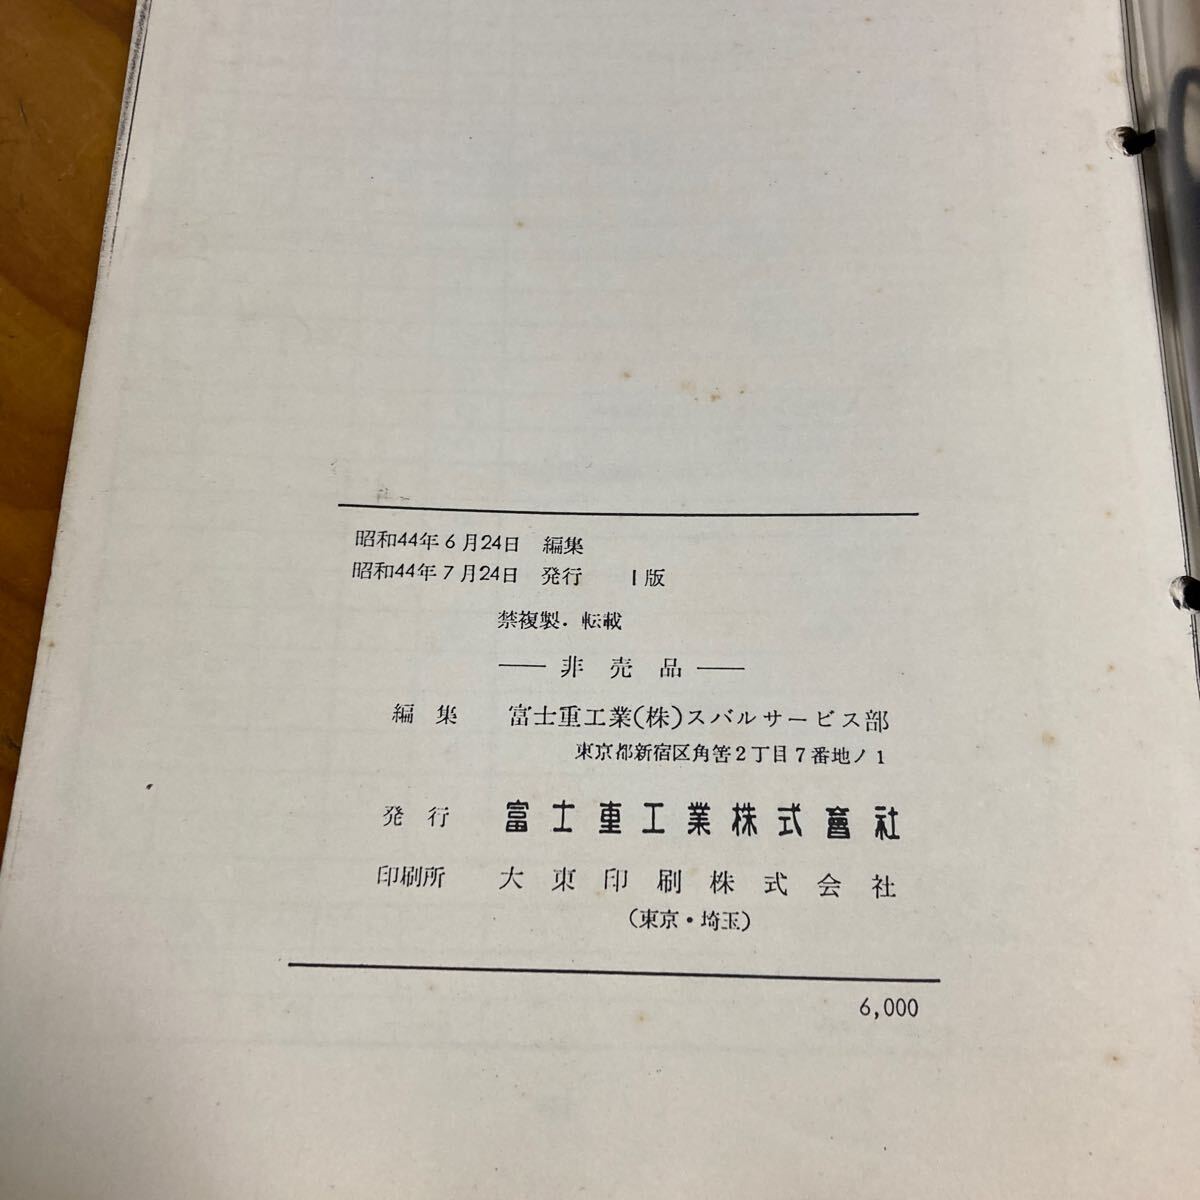  Subaru R2 K12 type maintenance point paper service manual 